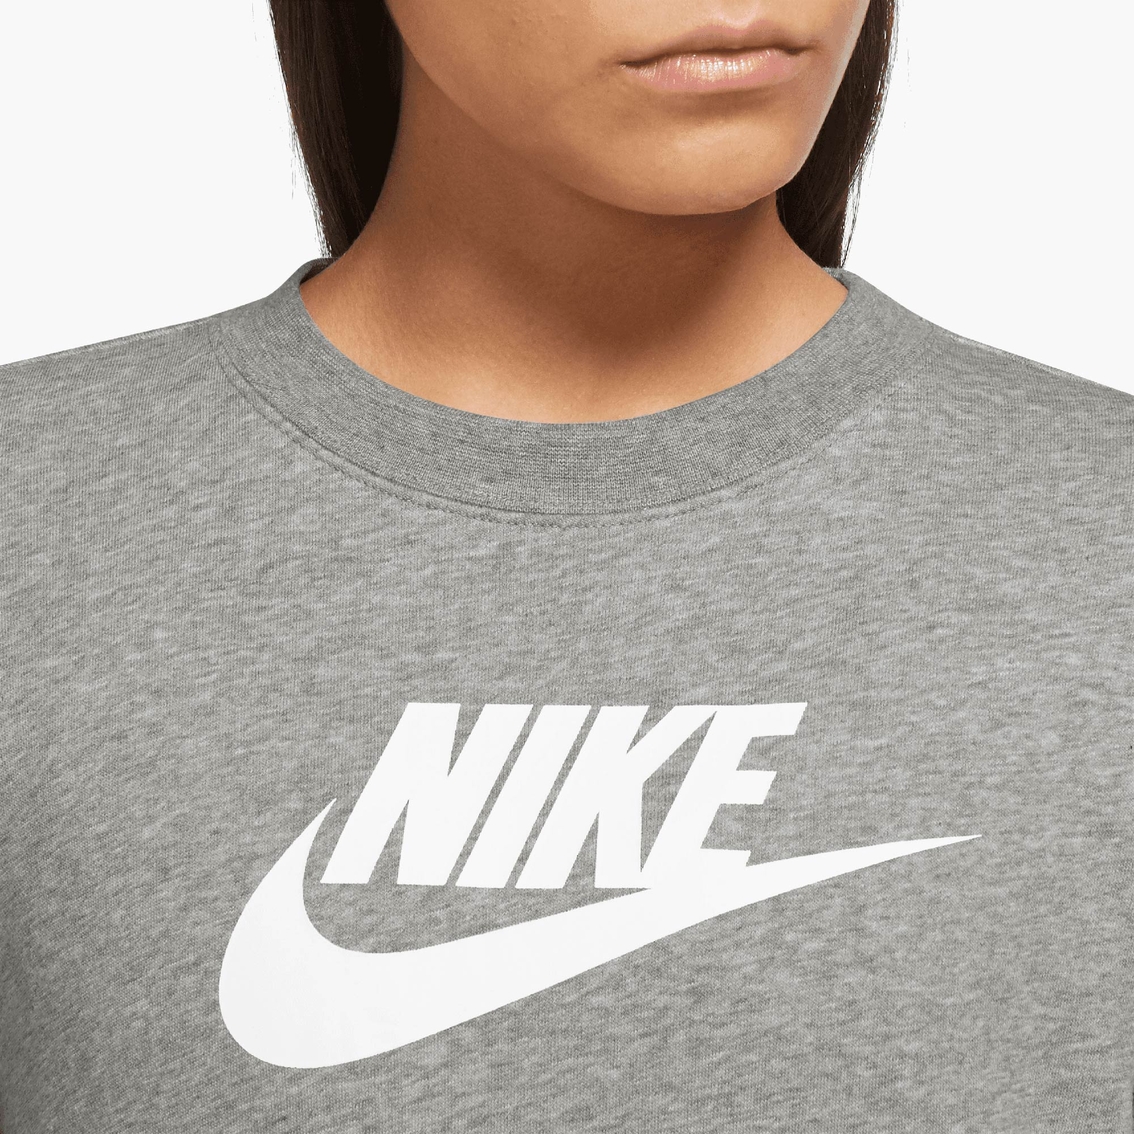 Nike Sportswear Club Fleece Futura Sweatshirt | Tops | Clothing ...